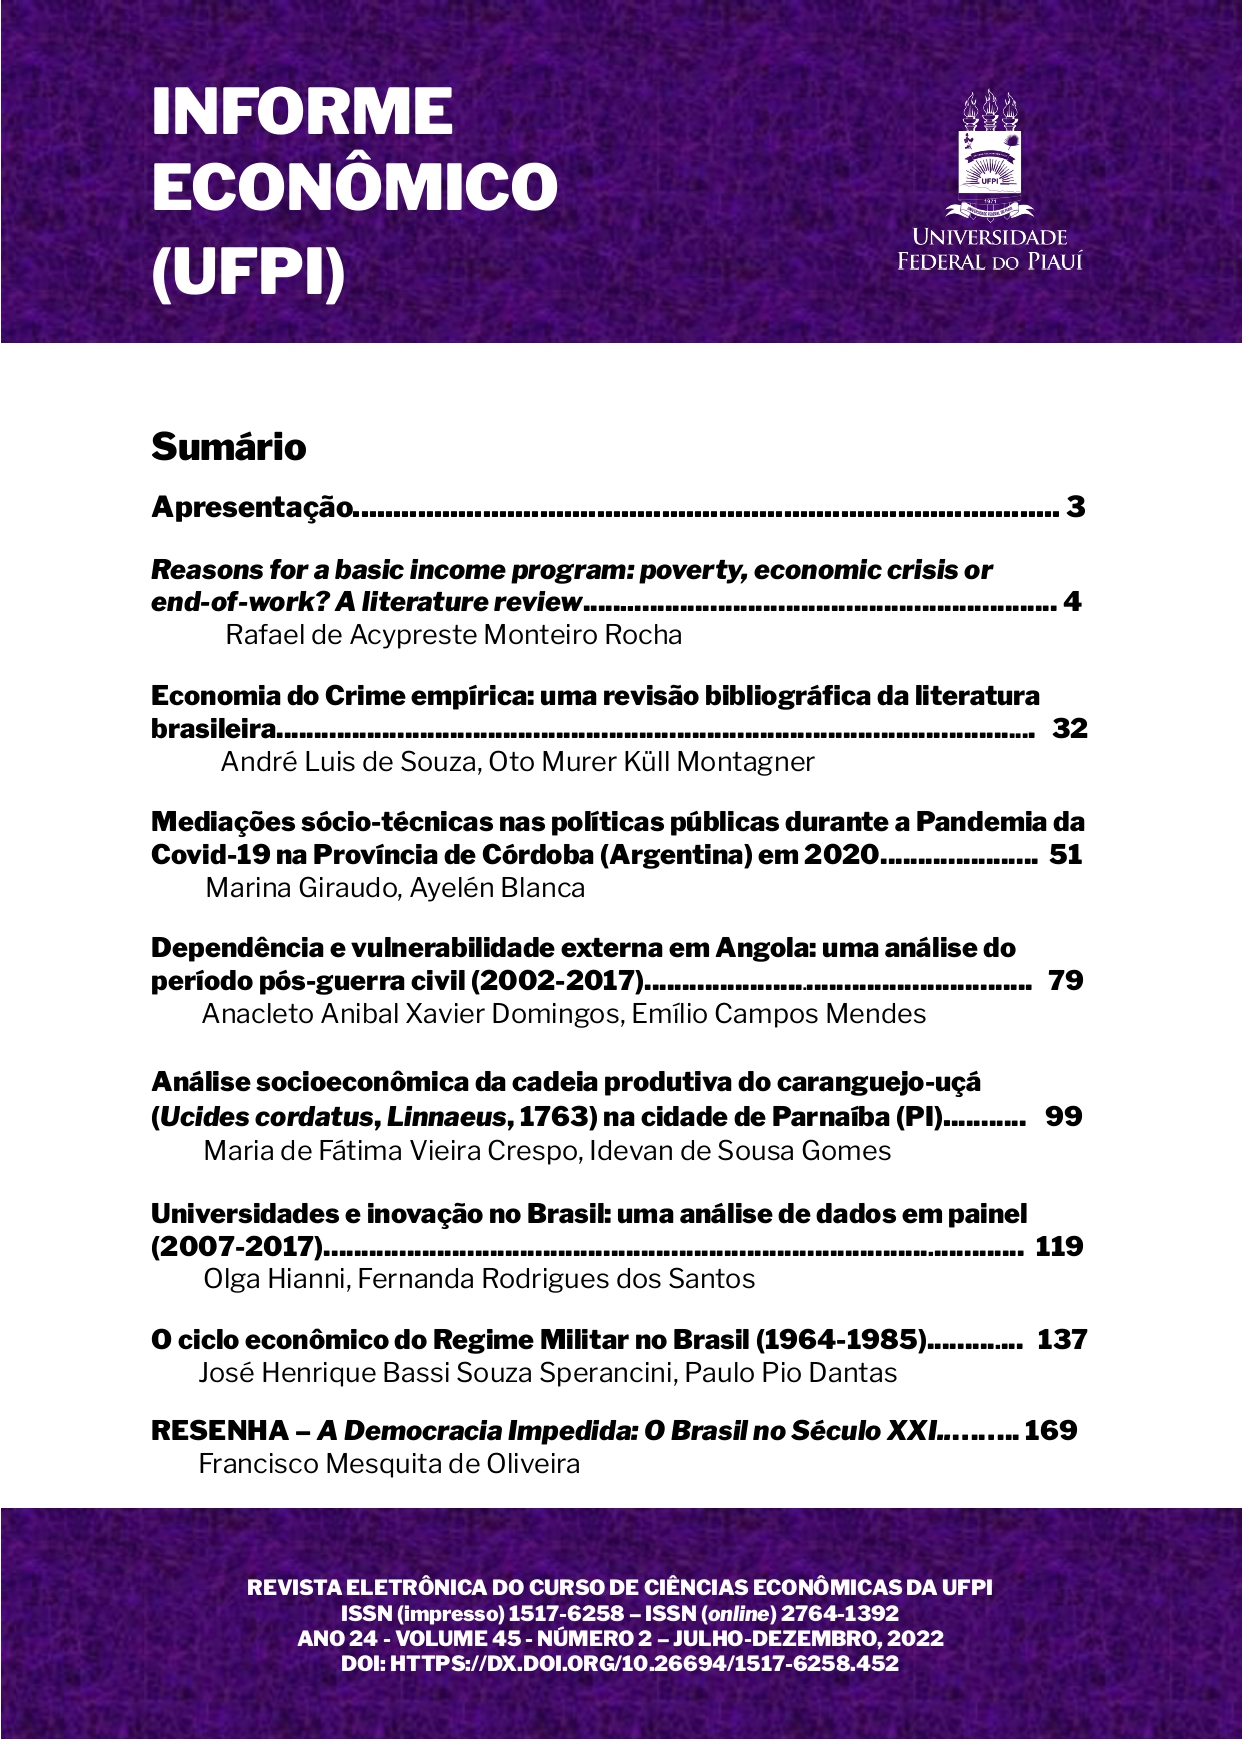 					Visualizar v. 45 n. 2 (2022): INFORME ECONÔMICO (UFPI), Ano 24, julho-dezembro
				